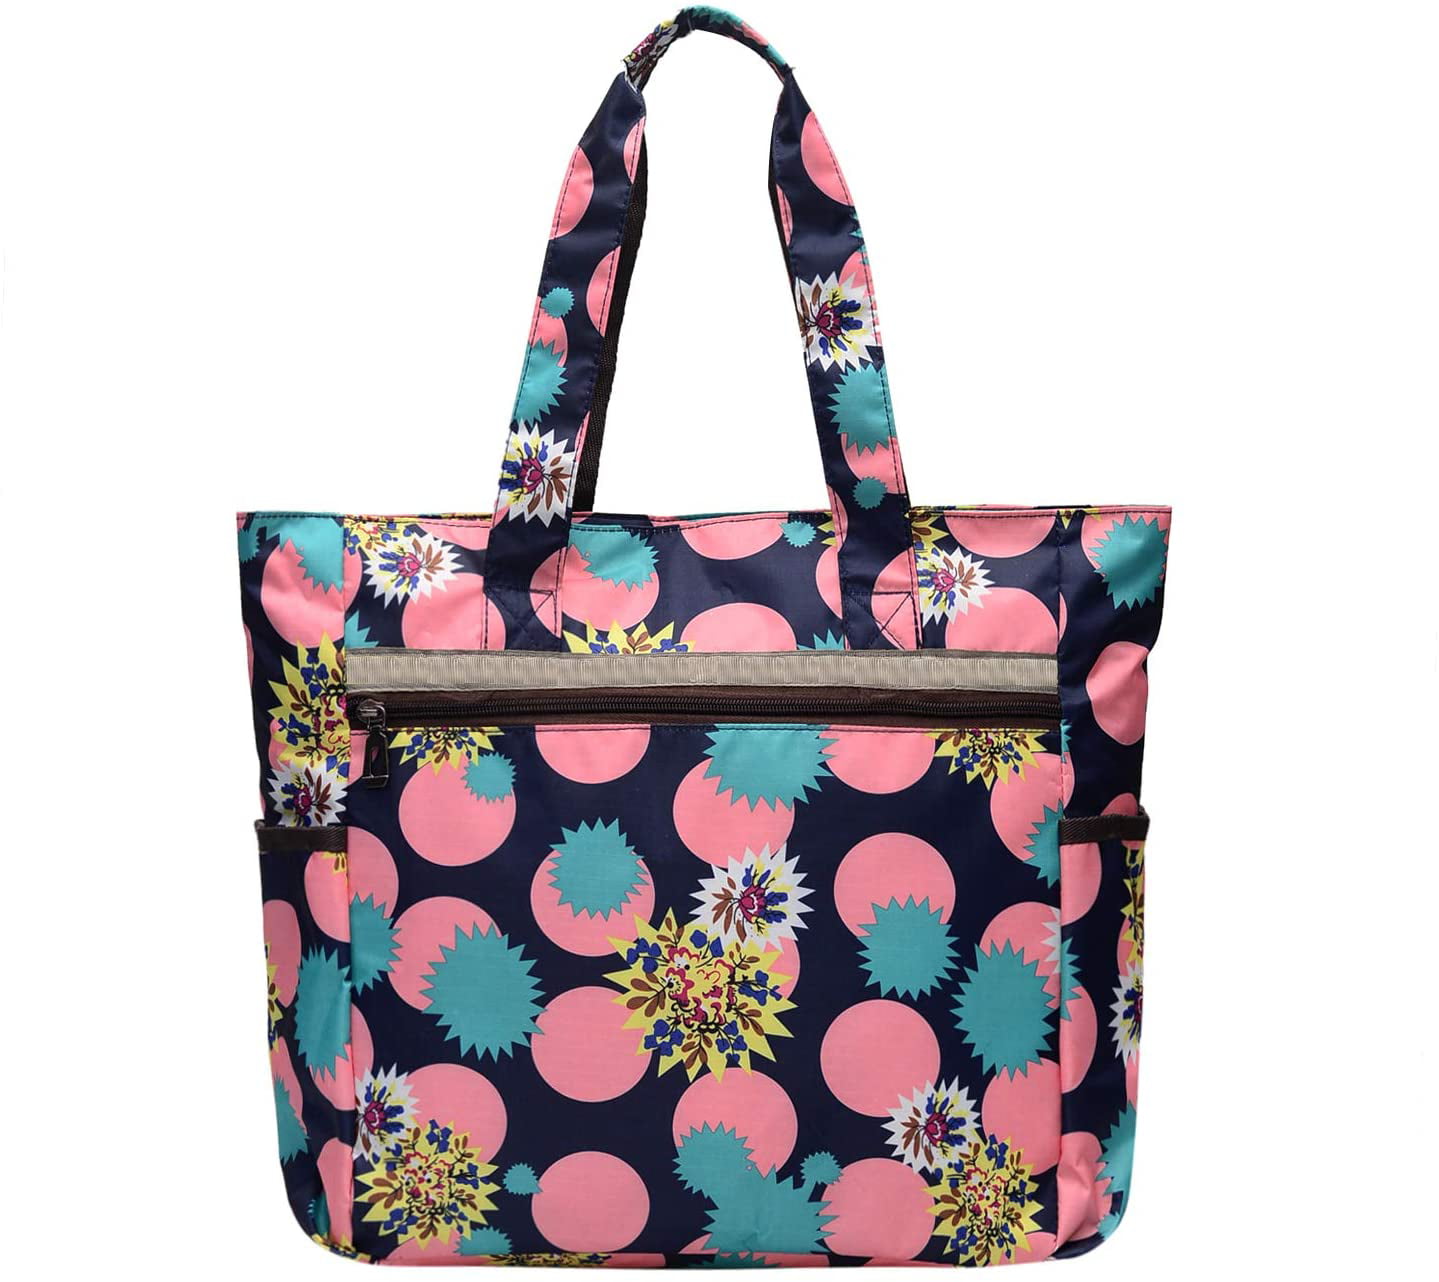 Purse Mini Nylon Waterproof Tote Bag Shoulder Bag for Gym Hiking Picnic Travel Beach Backpack Handbag Women Messenger Bags 